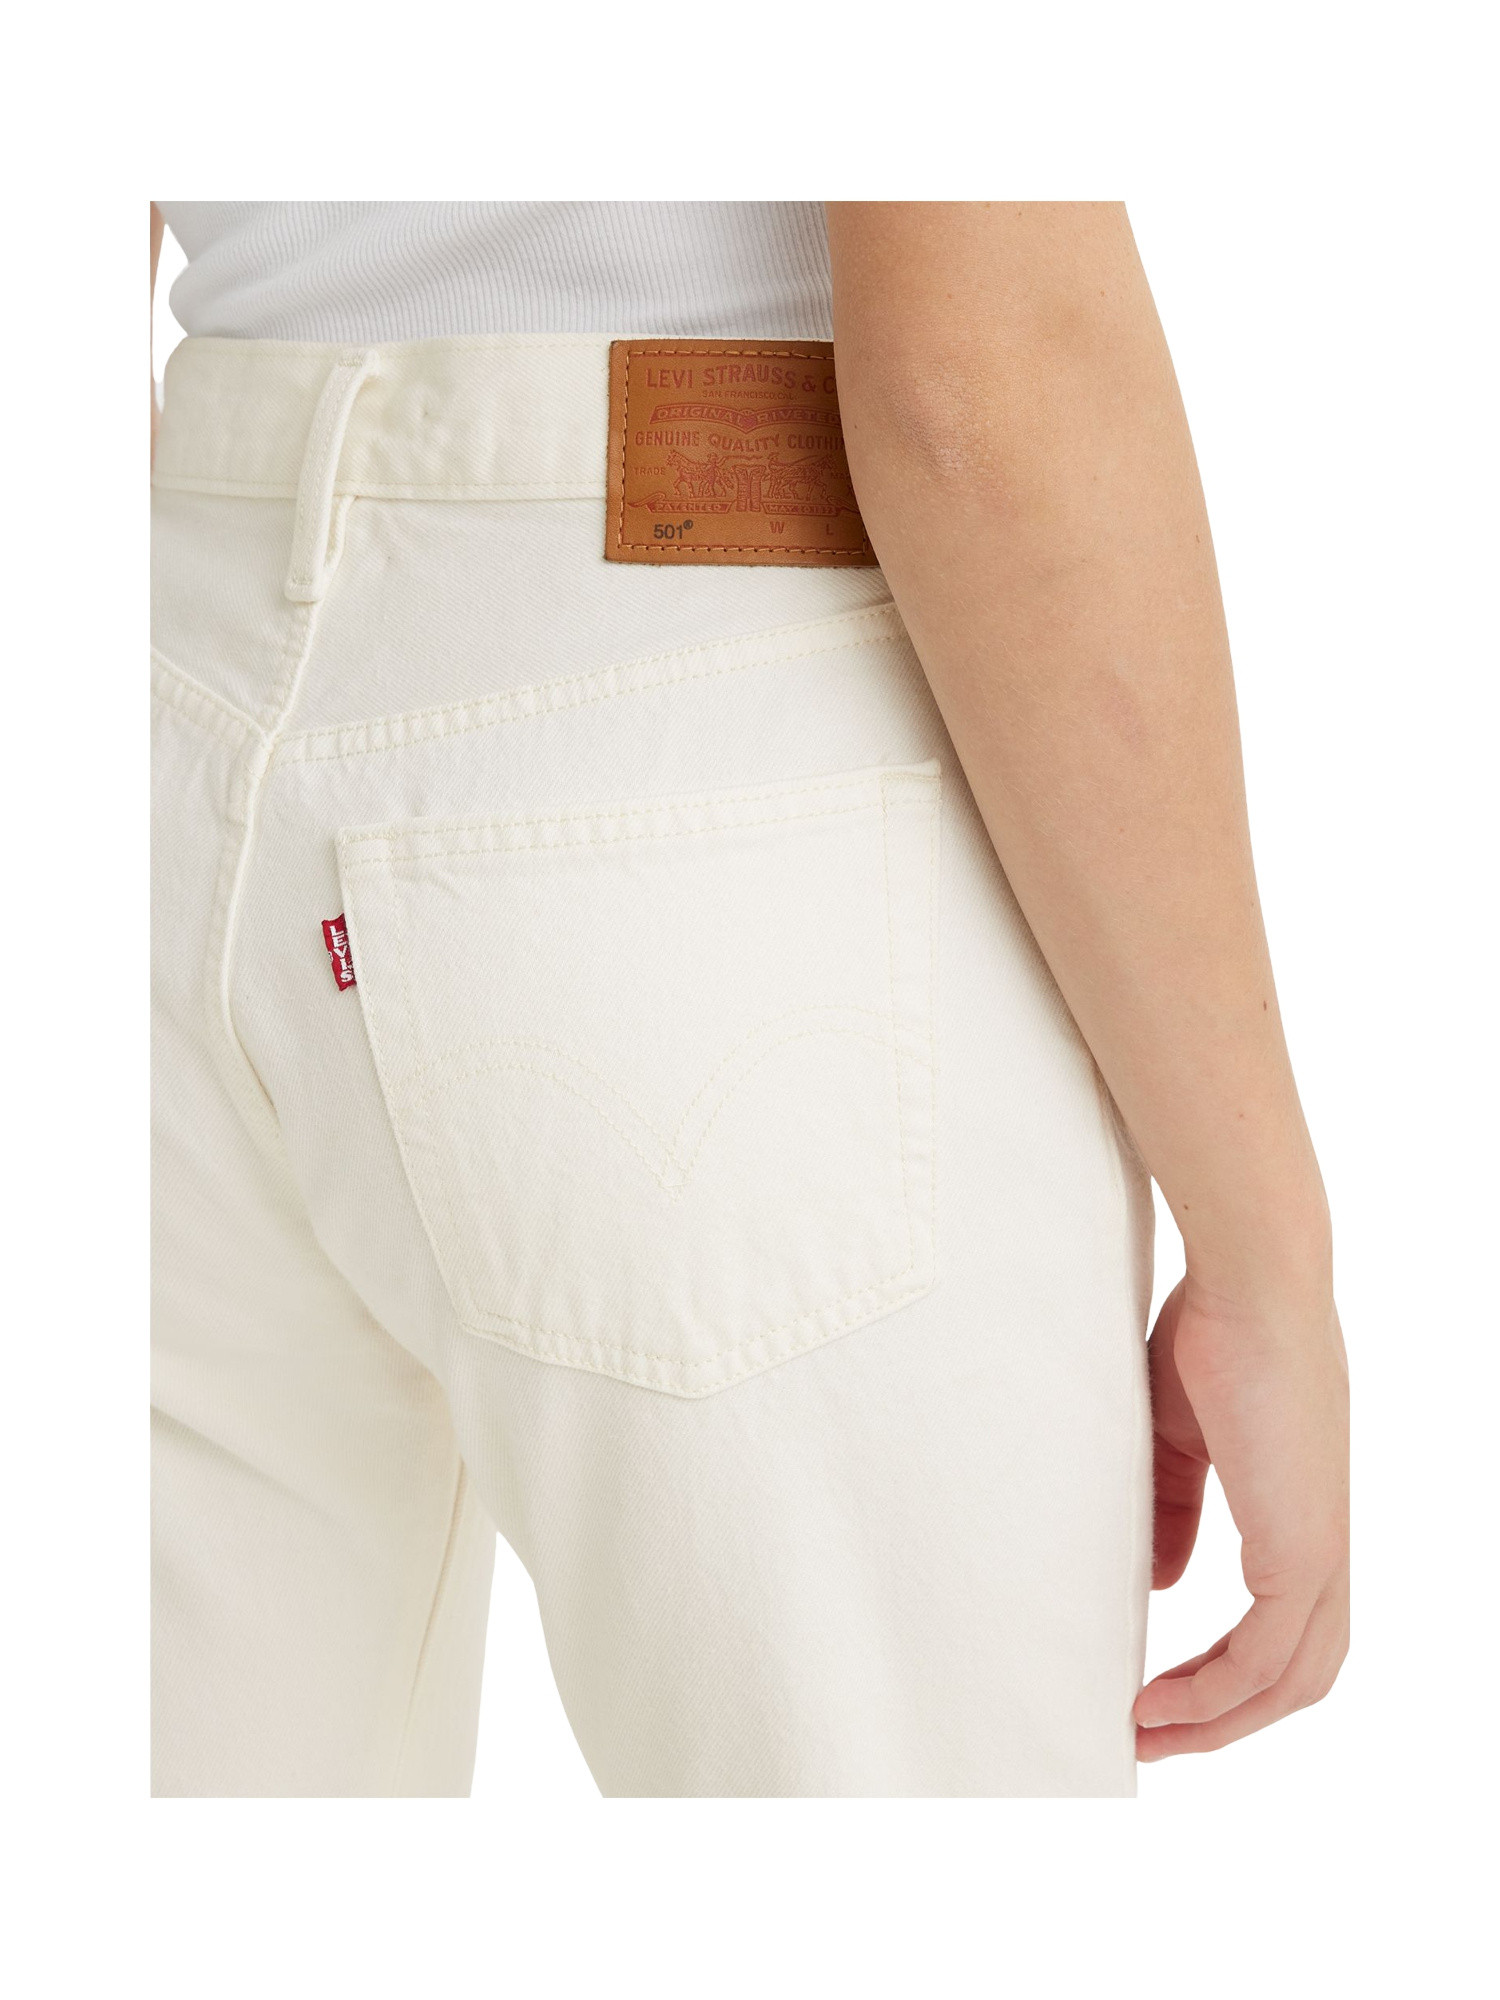 Levi's - original 501® jeans, White, large image number 6